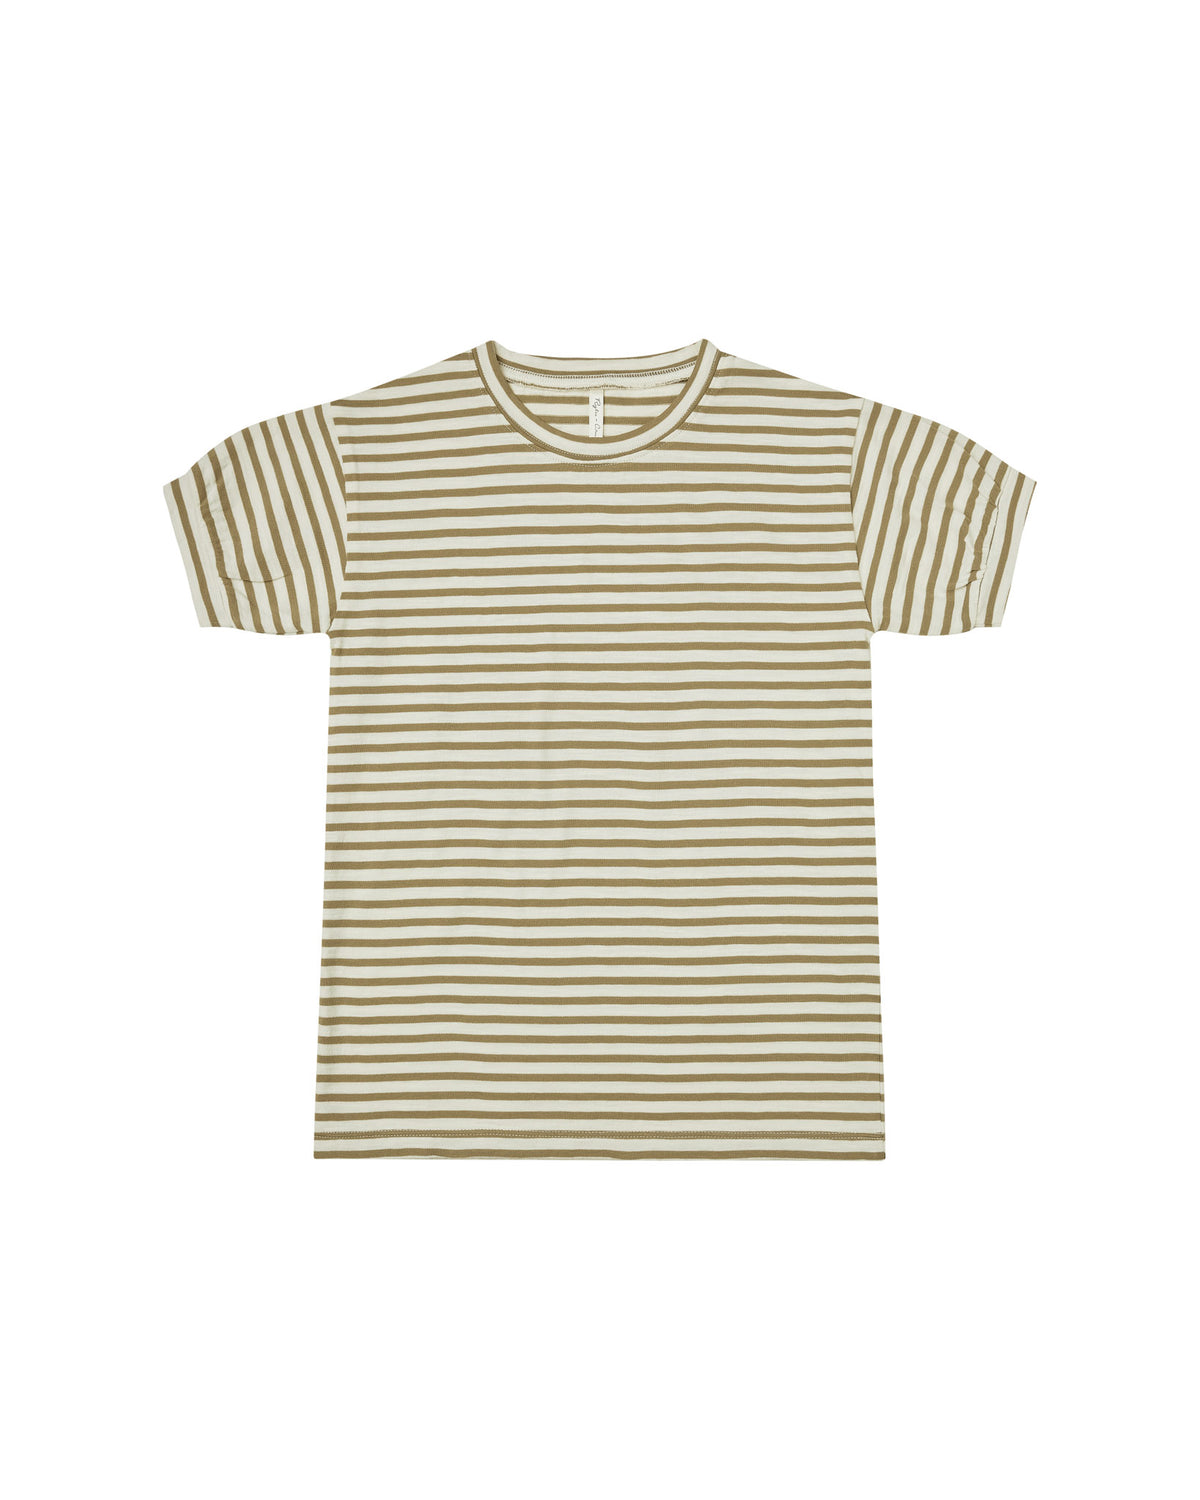 Jersey Shirt Dress || Olive Stripe